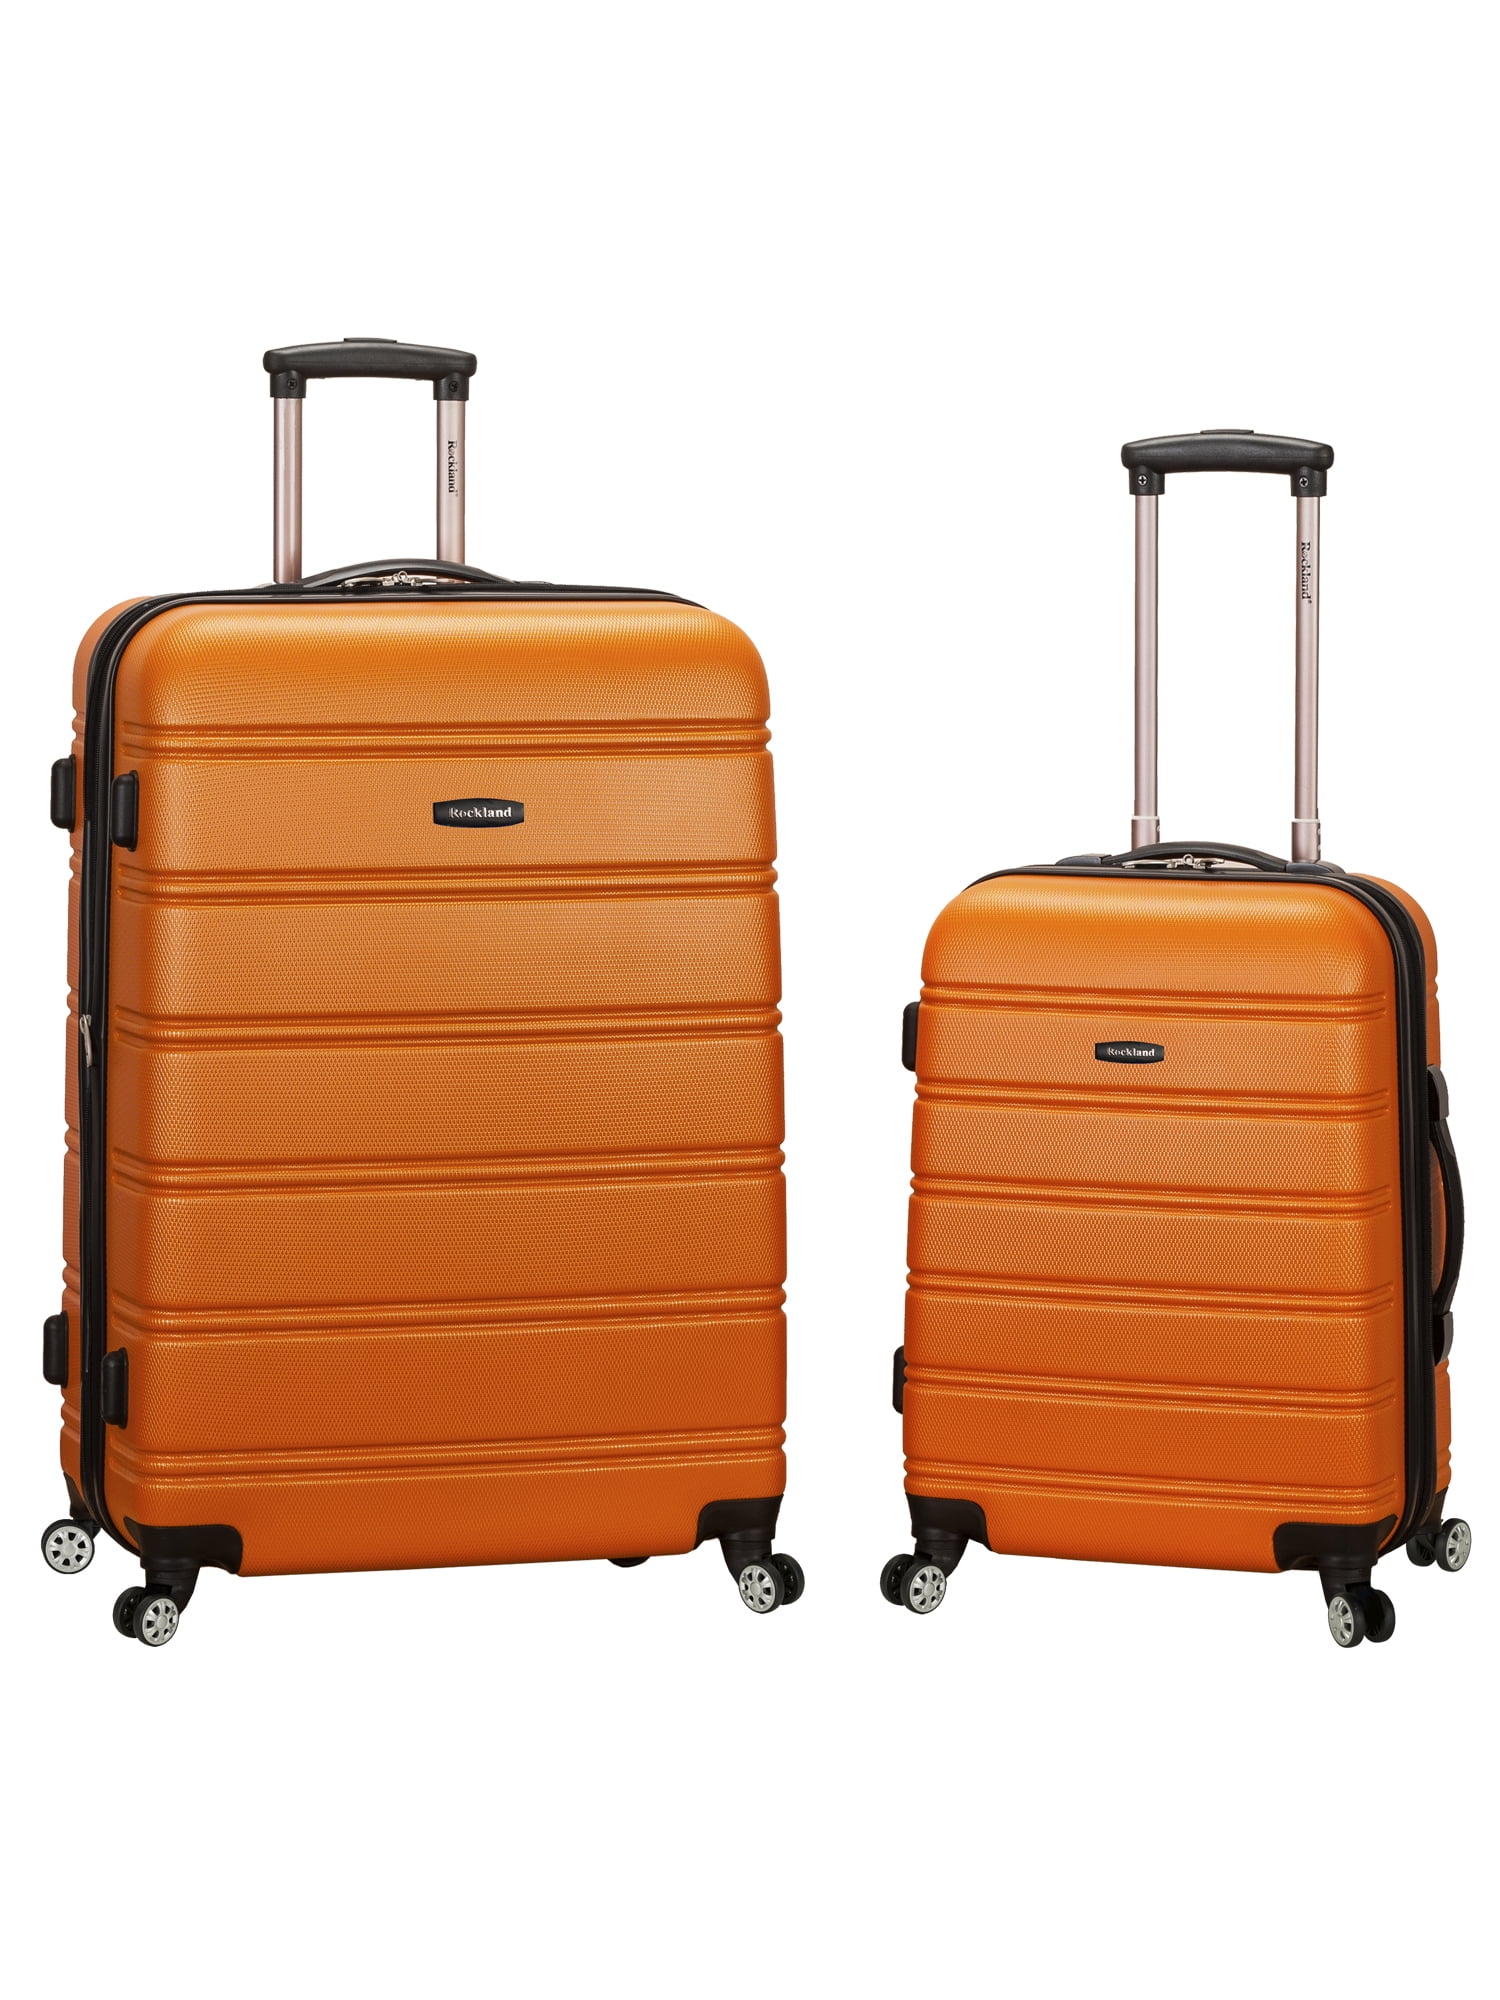 Rockland Melbourne 2pc Expandable ABS Hardside Carry On Spinner Luggage Set - Orange